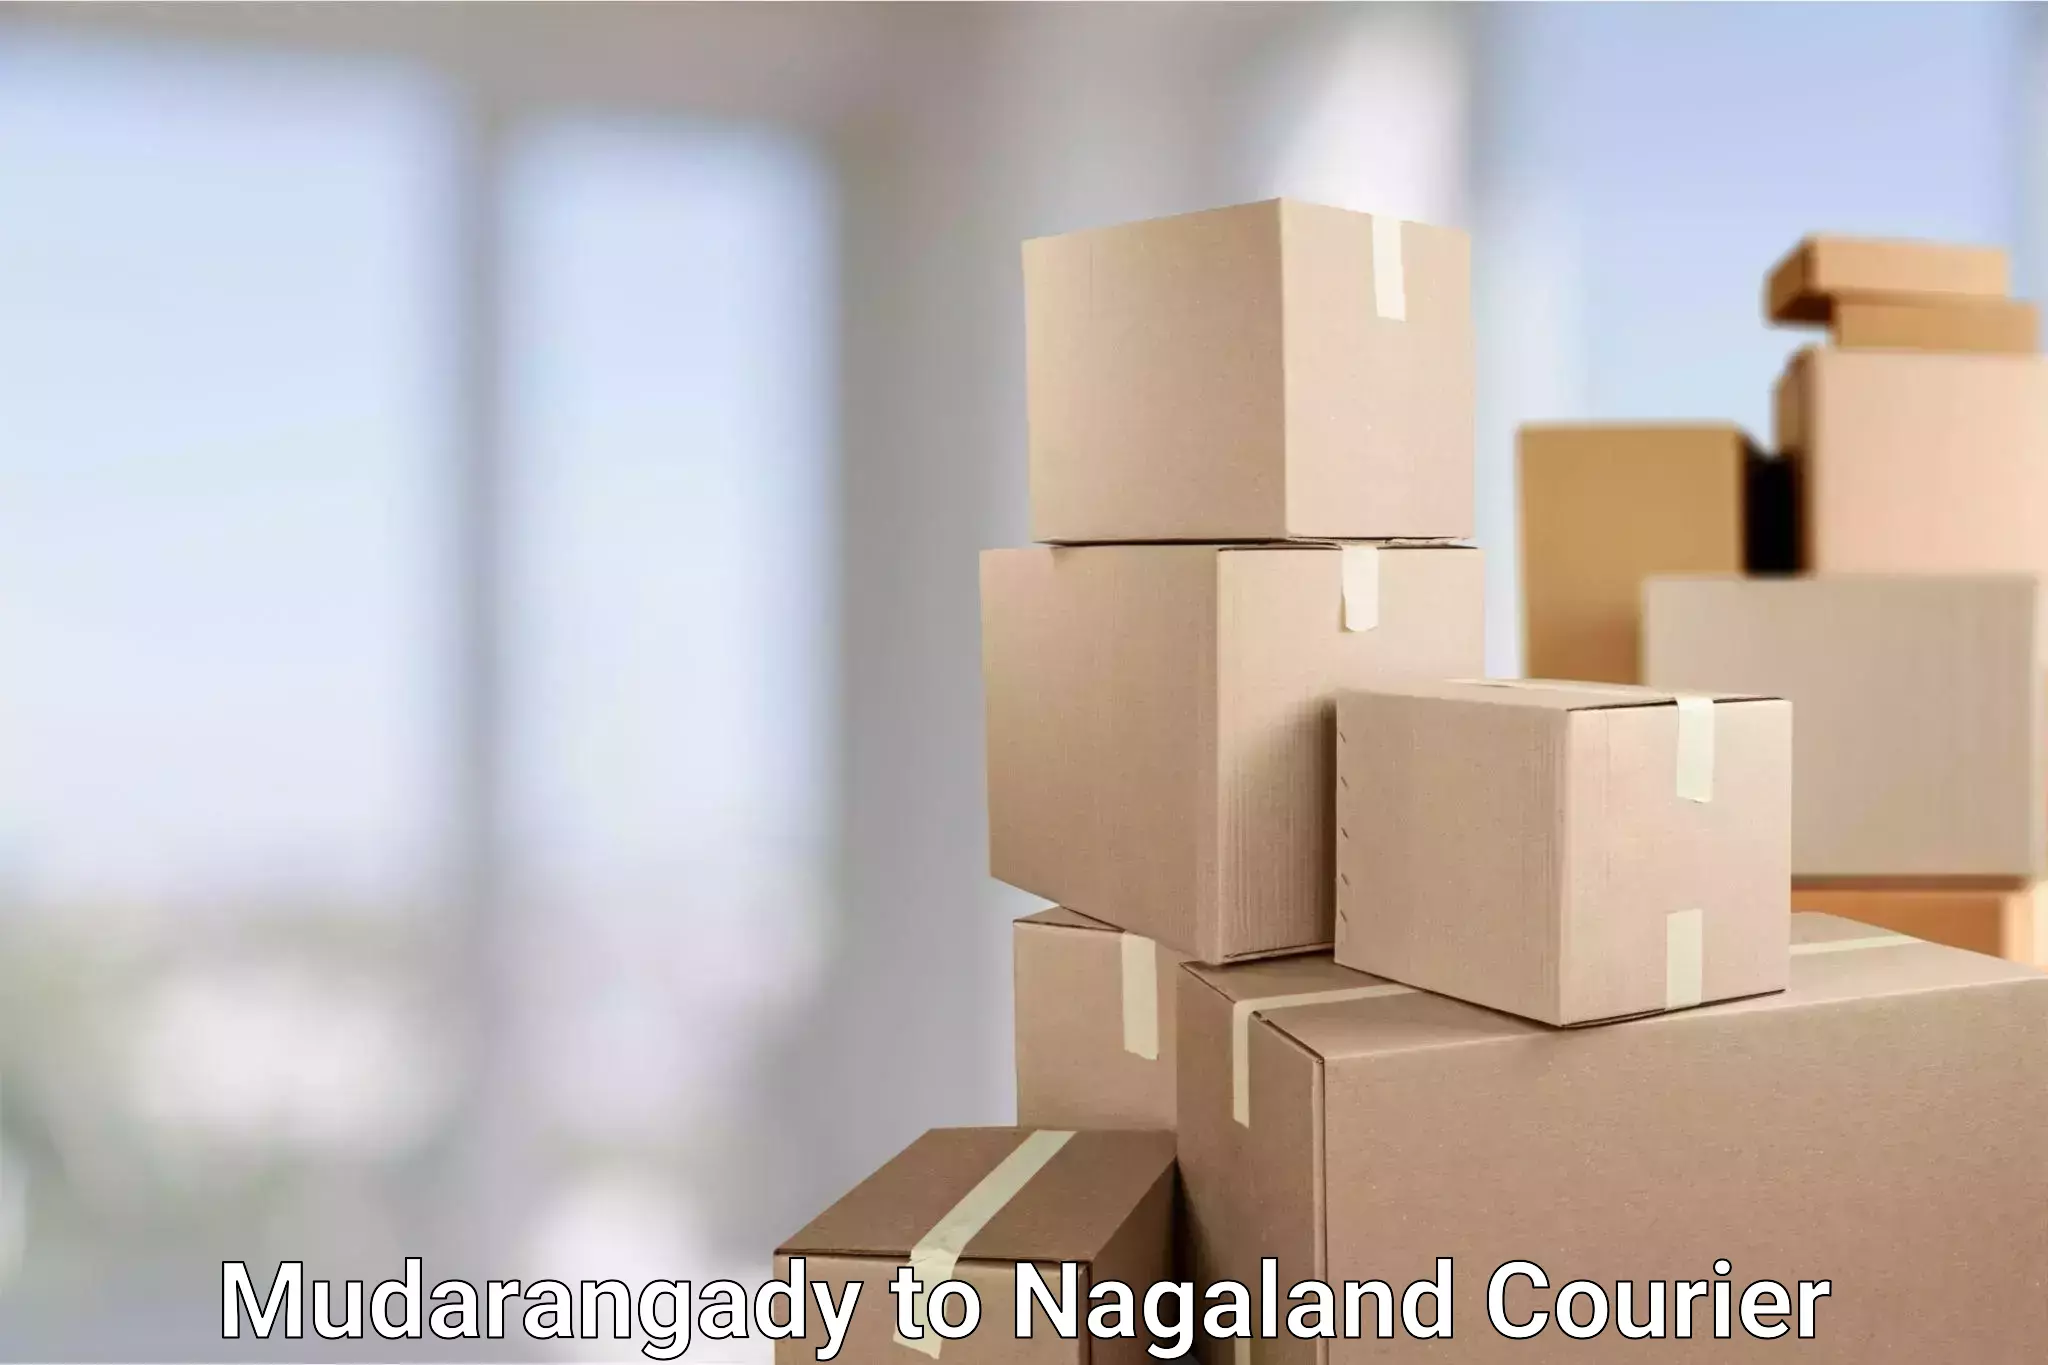 Enhanced tracking features Mudarangady to Nagaland